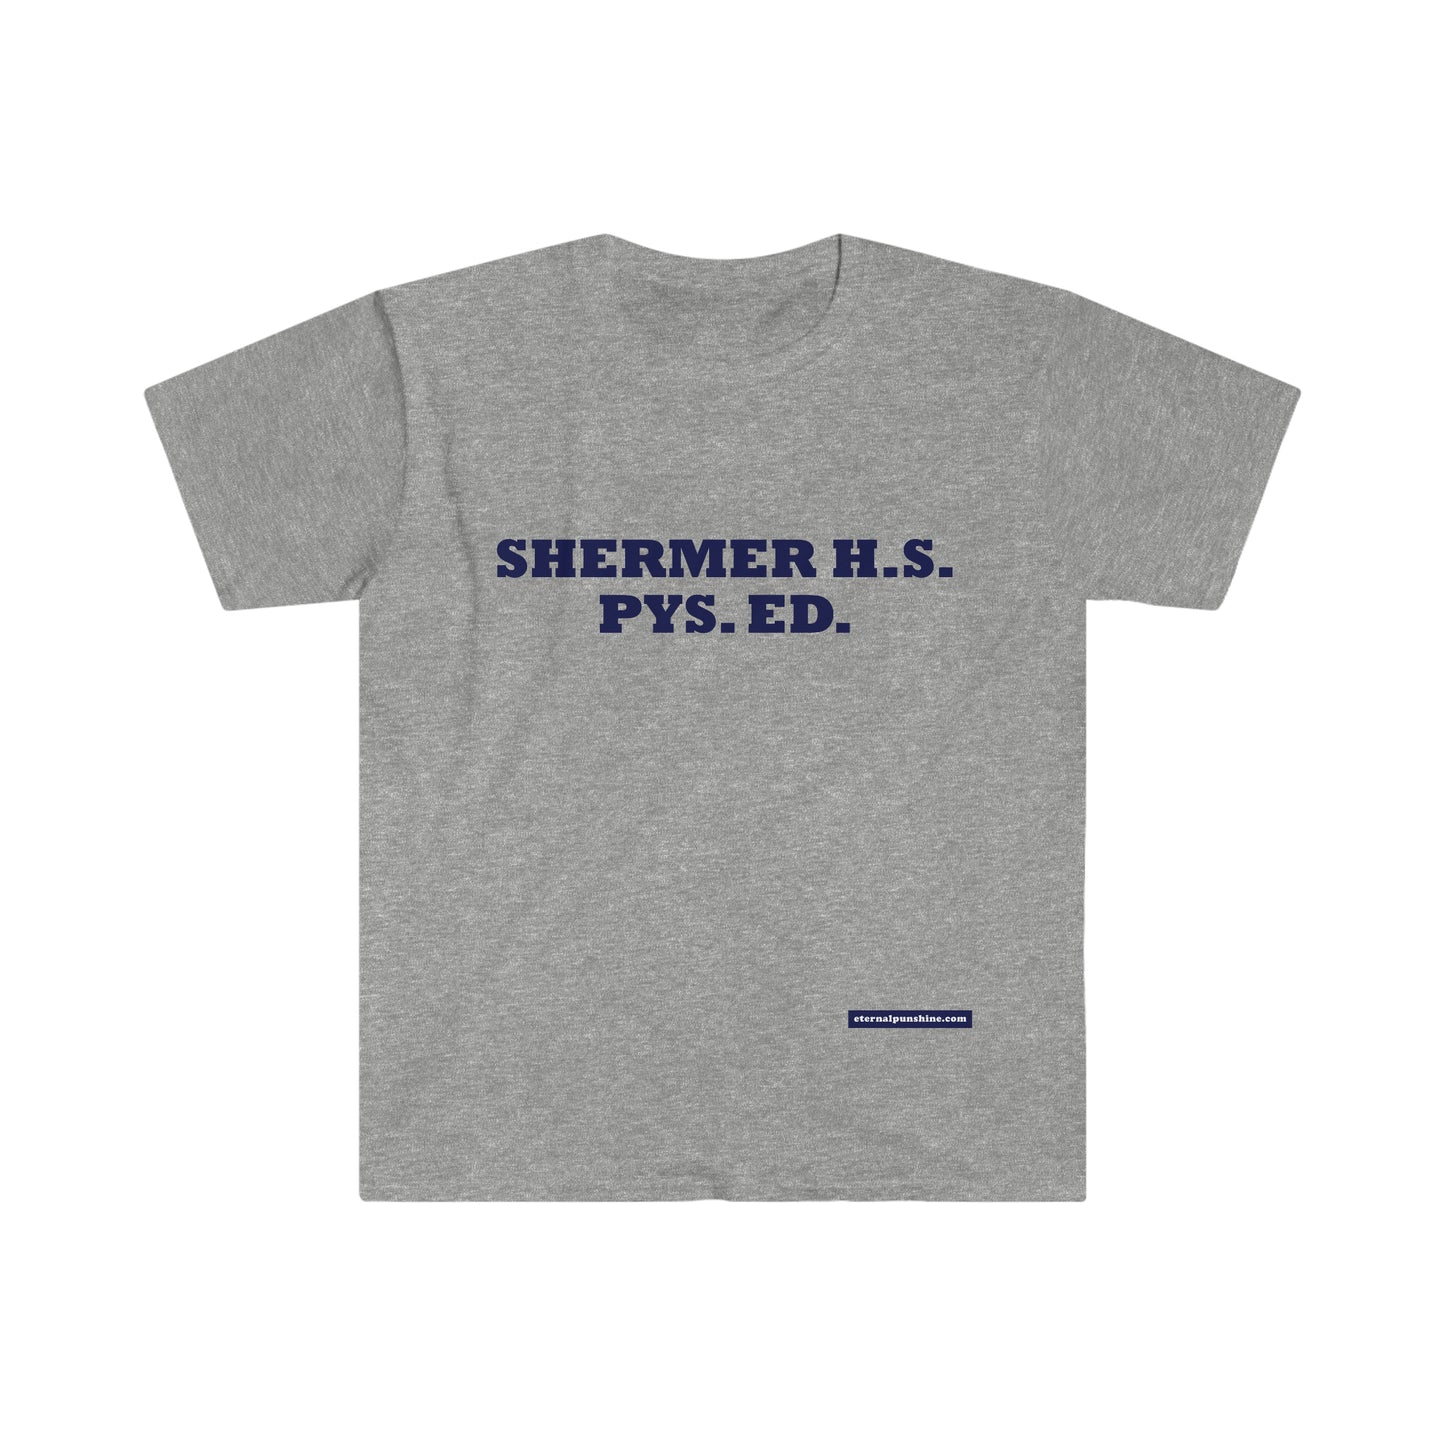 Shermer High Pys. Ed.